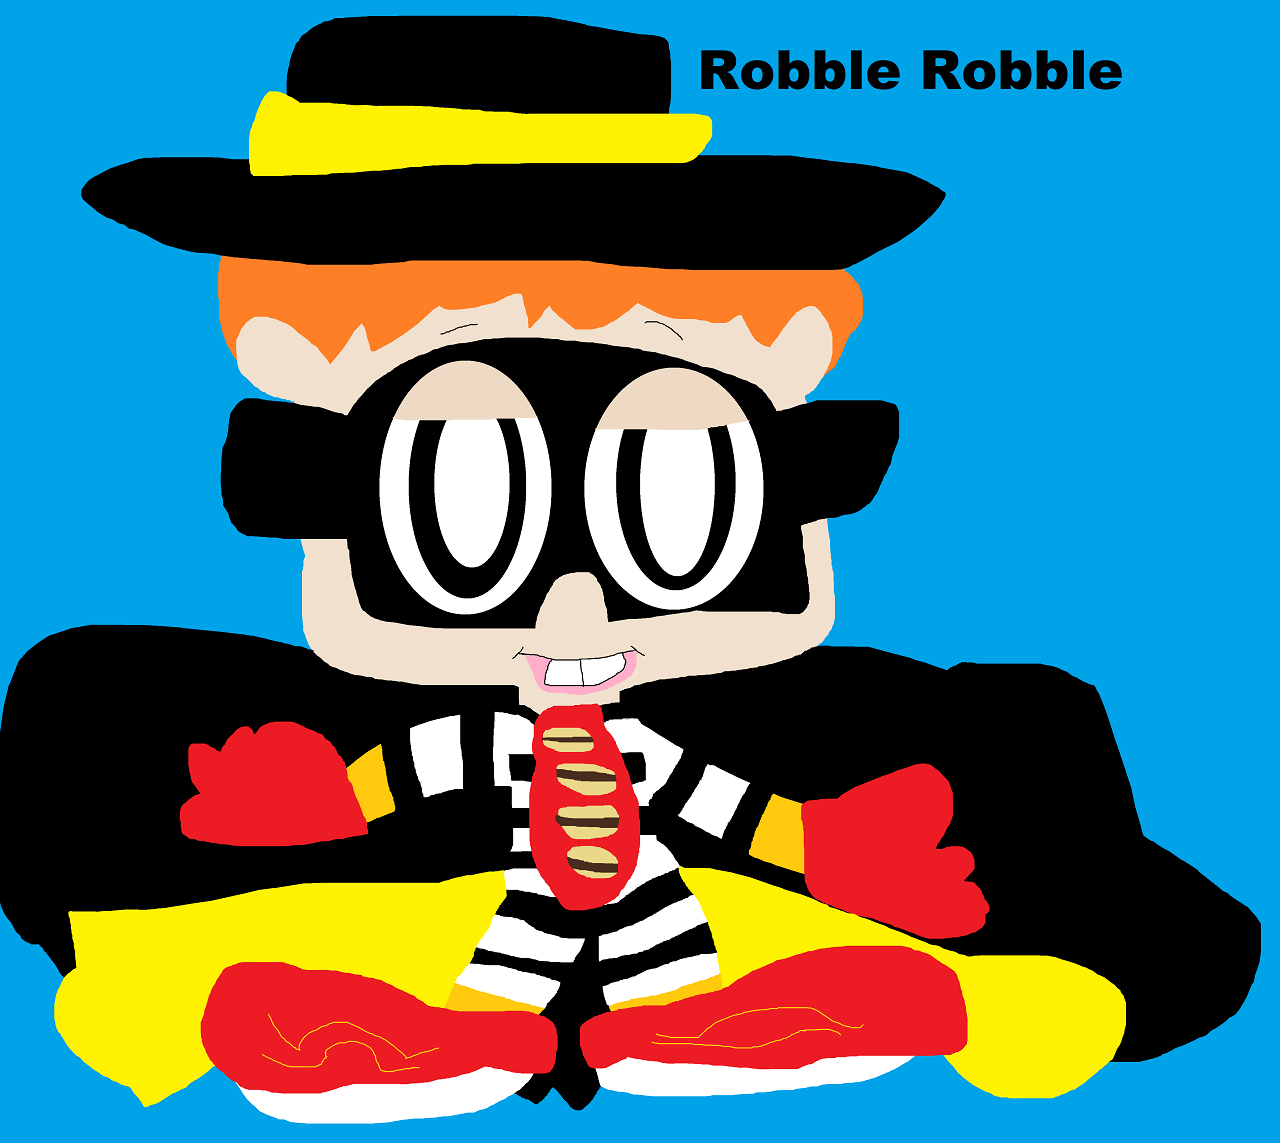 Robble Robble Again by Falconlobo